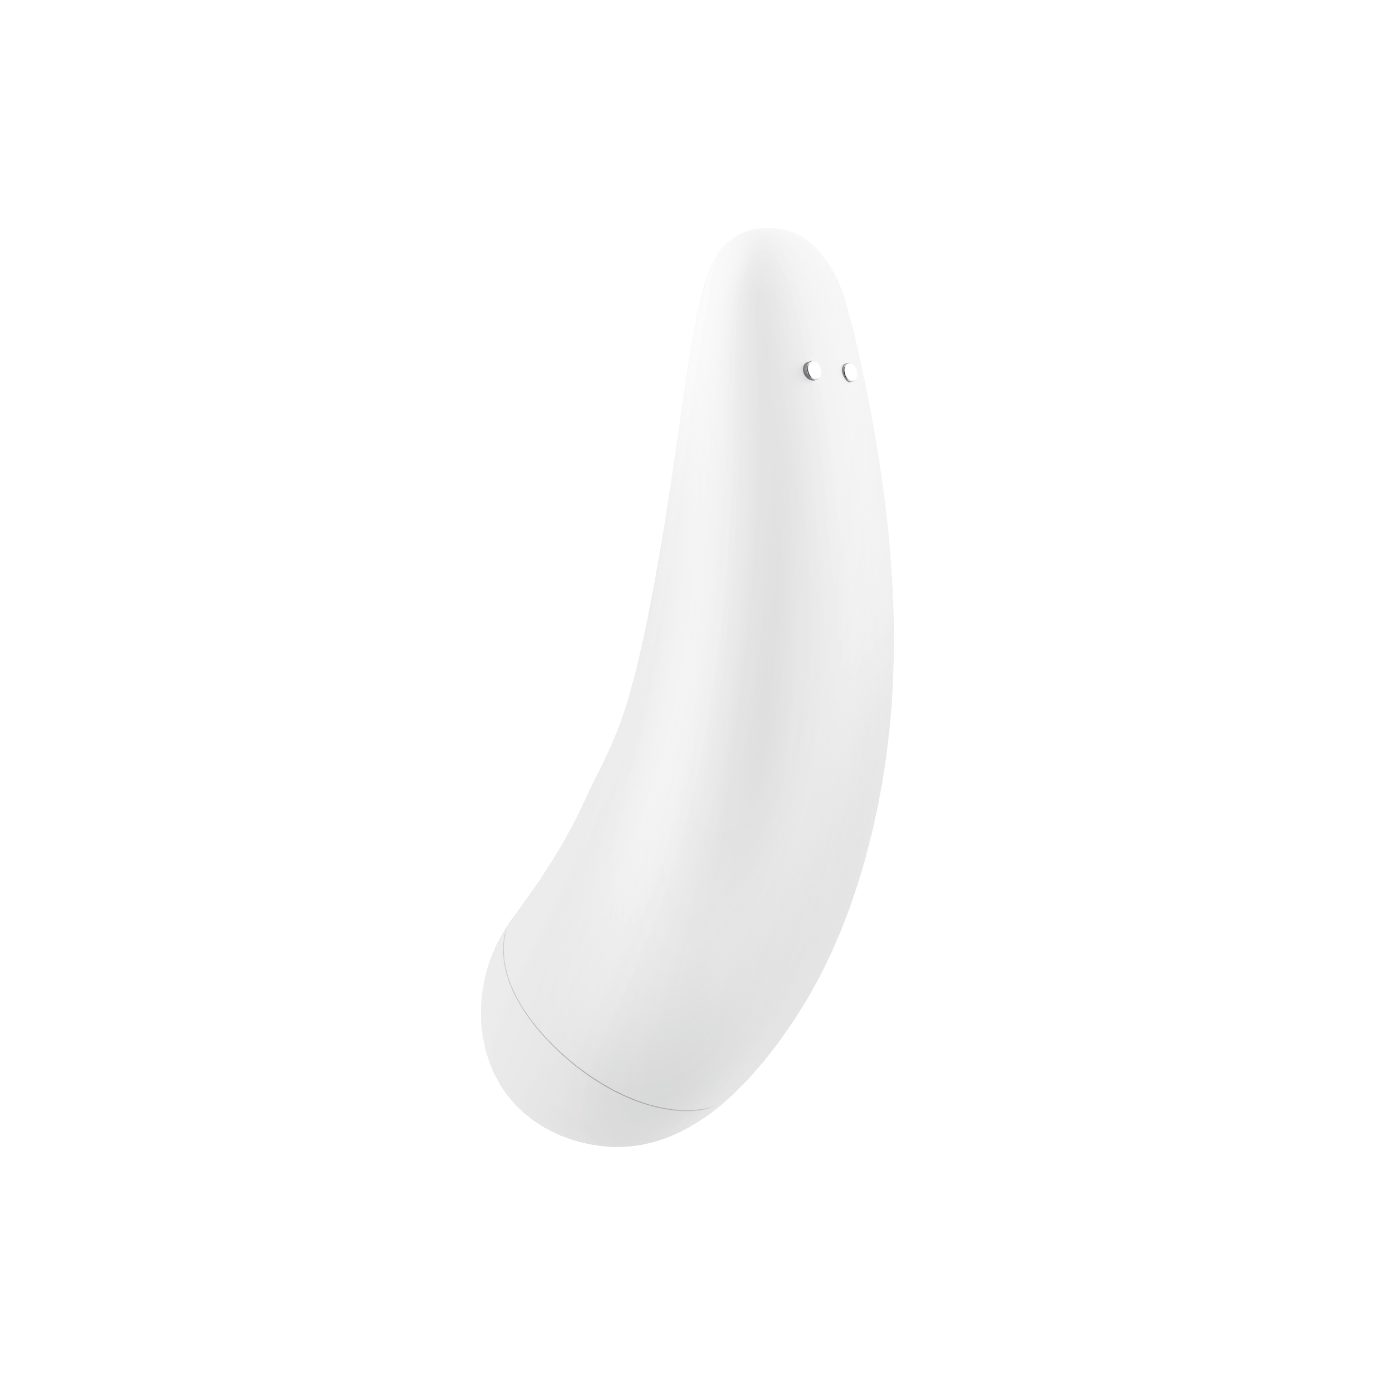 Satisfyer Klitoris-Stimulator Satisfyer "Curvy App", mit 13,5cm 2 App, Connect Druckwellenvibrator